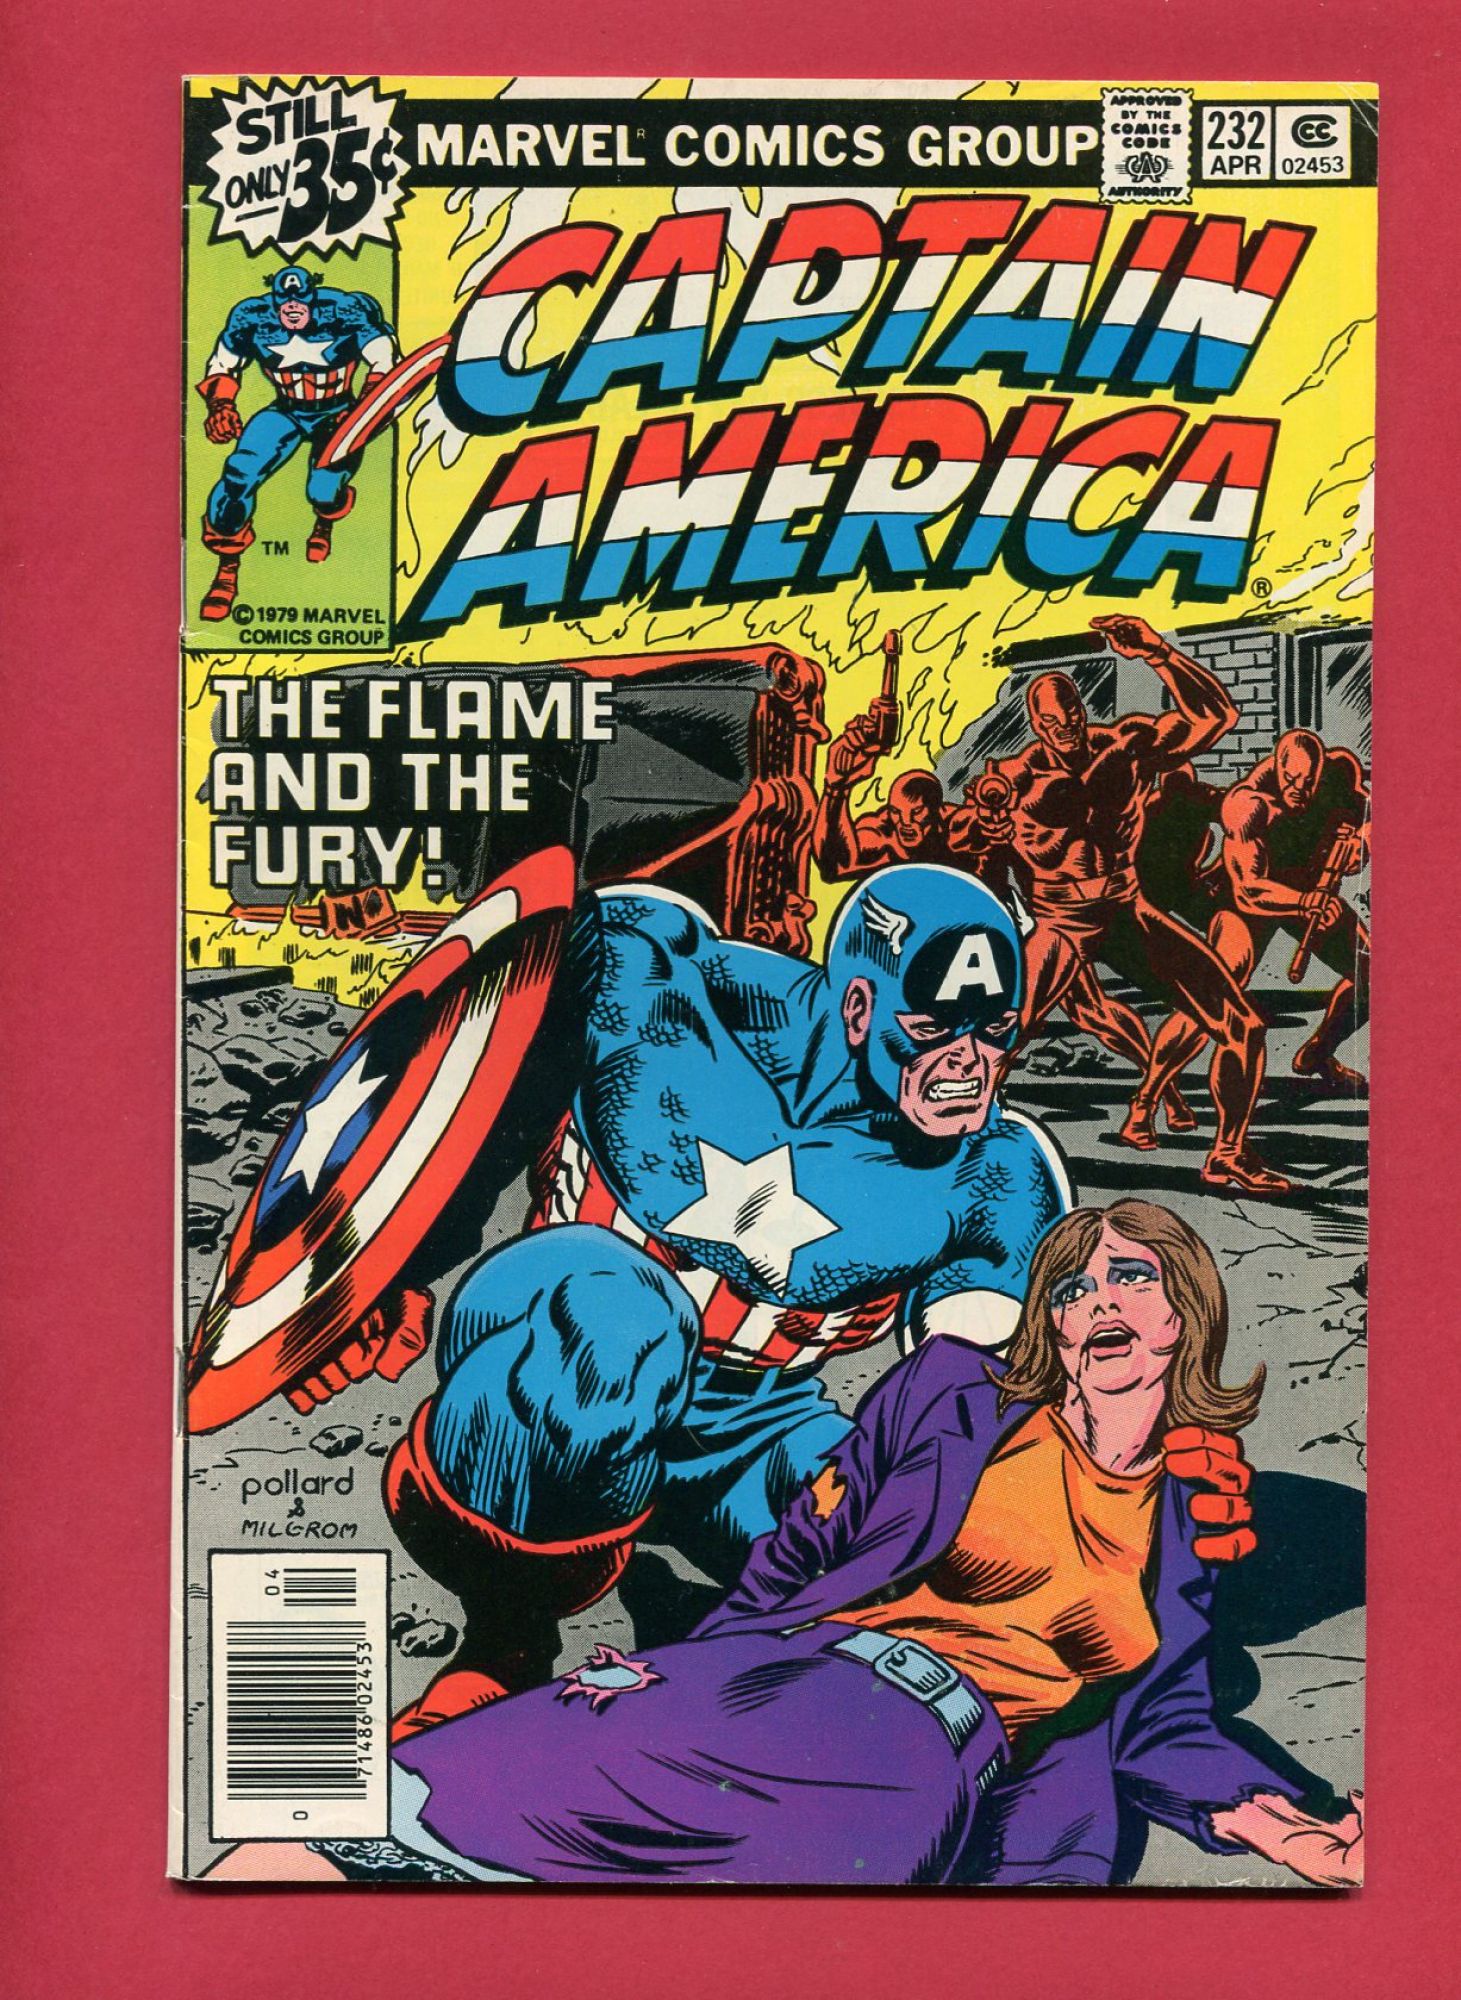 Captain America #232, Apr 1979, 6.5 FN+